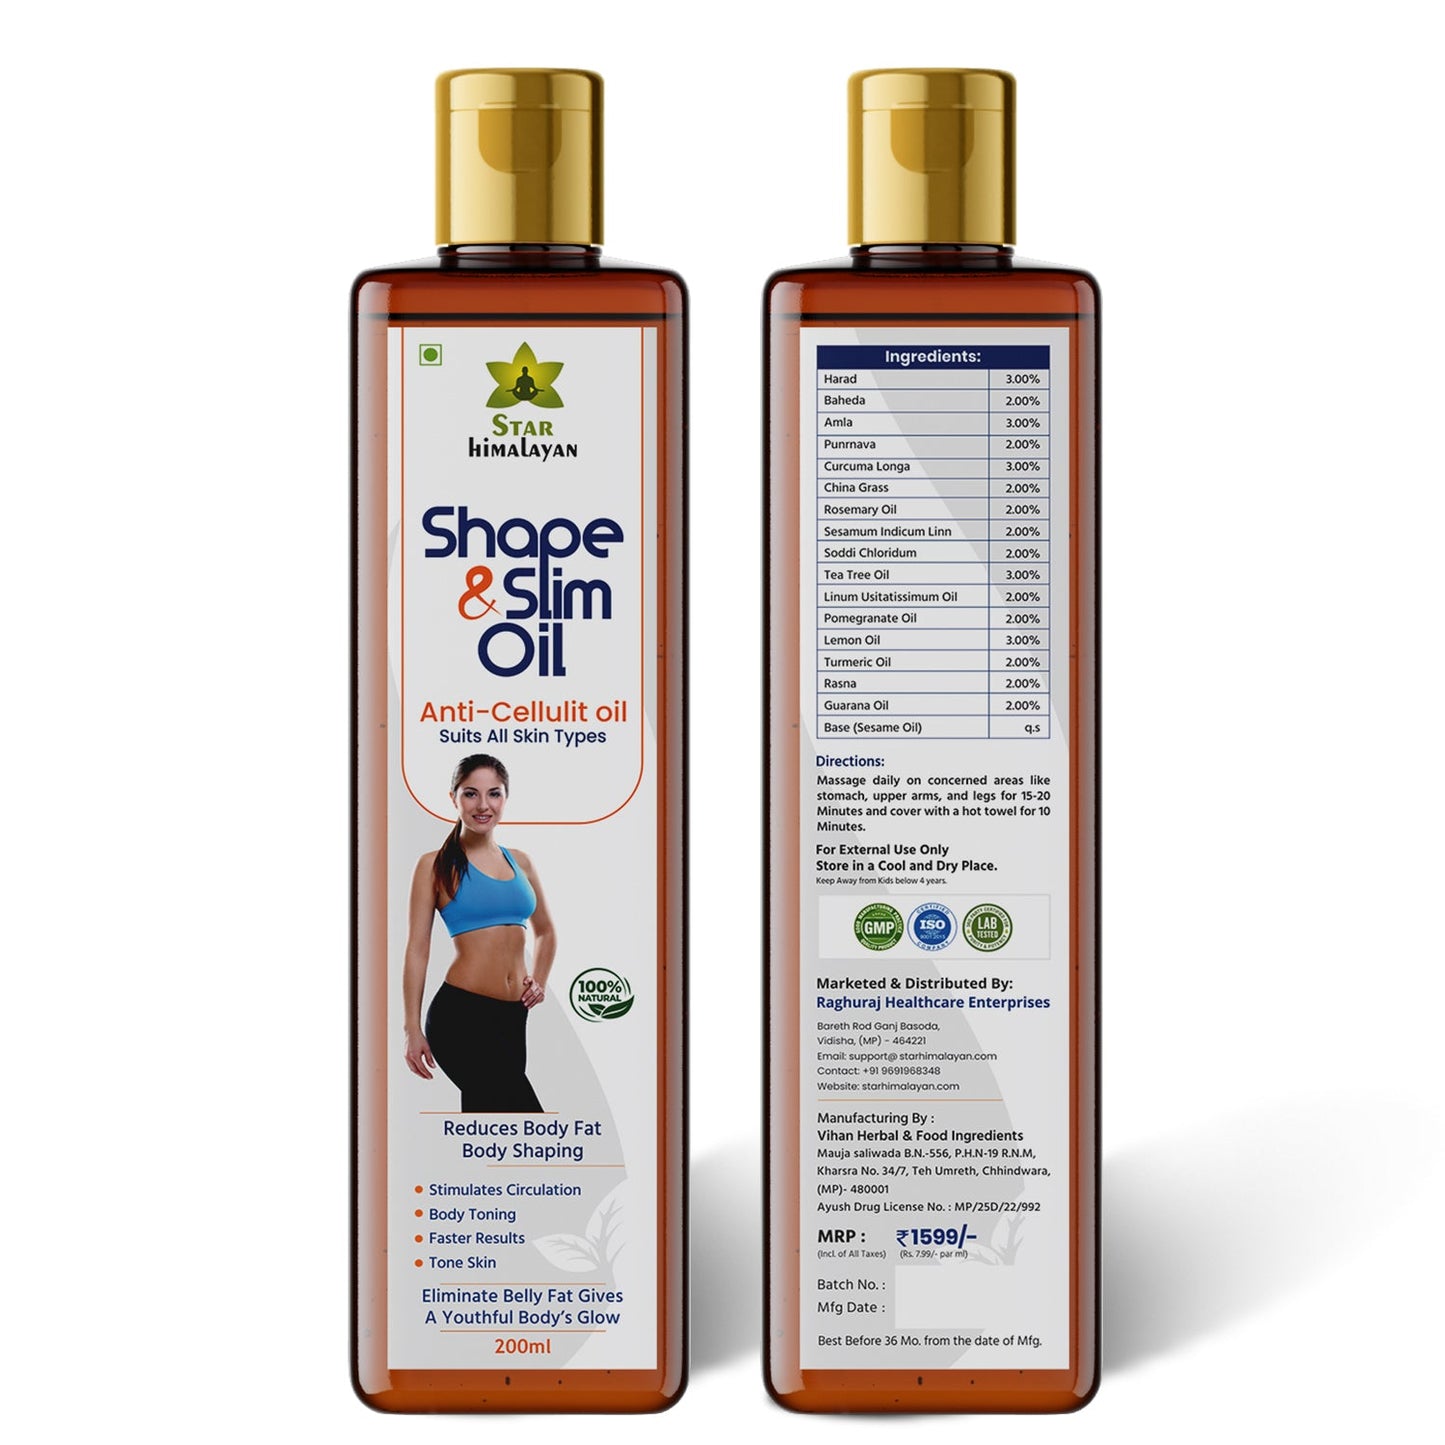 Shape & Slim Fat Burner - Capsule+Oil (Buy 1 Get 1 Free) @1199